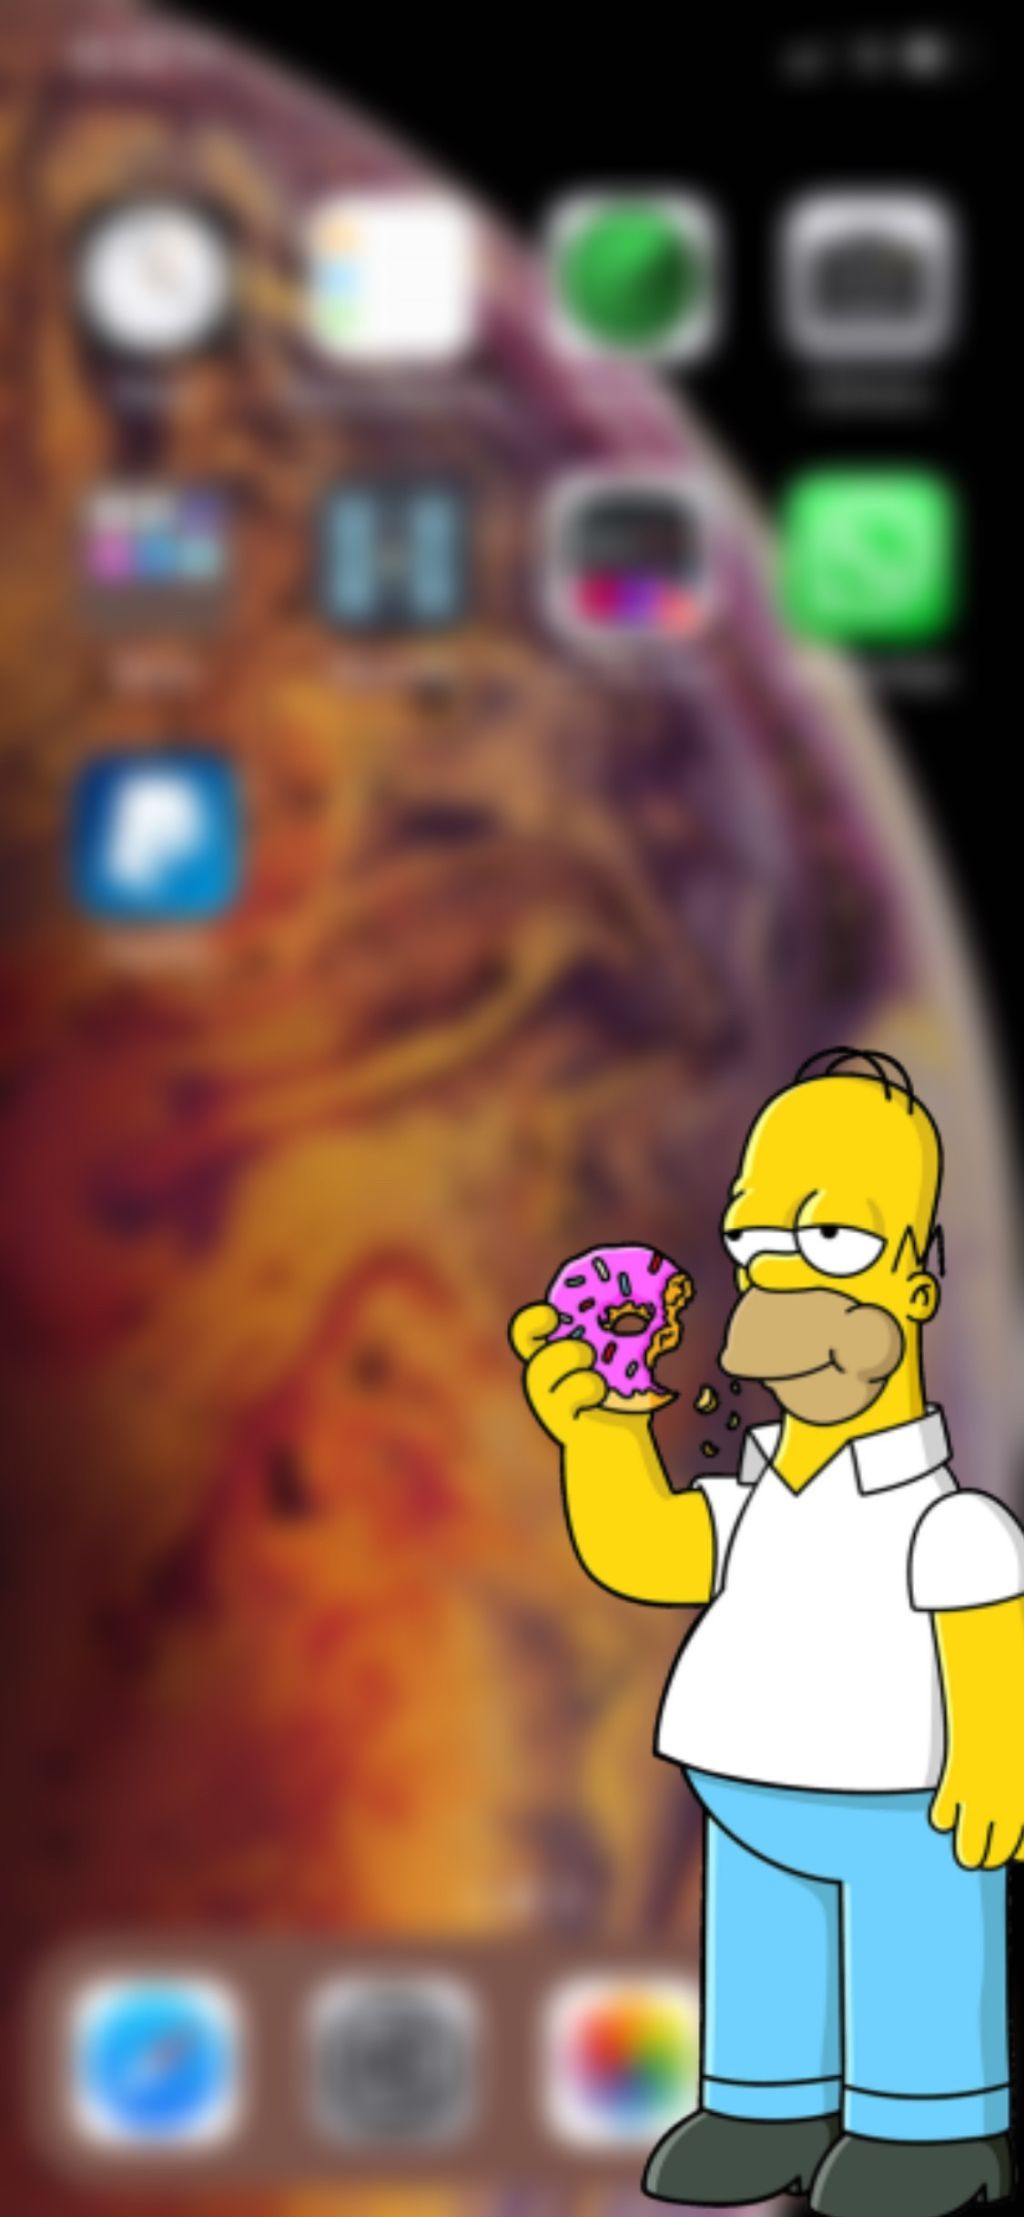 Aesthetic Simpsons iPhone Wallpaper